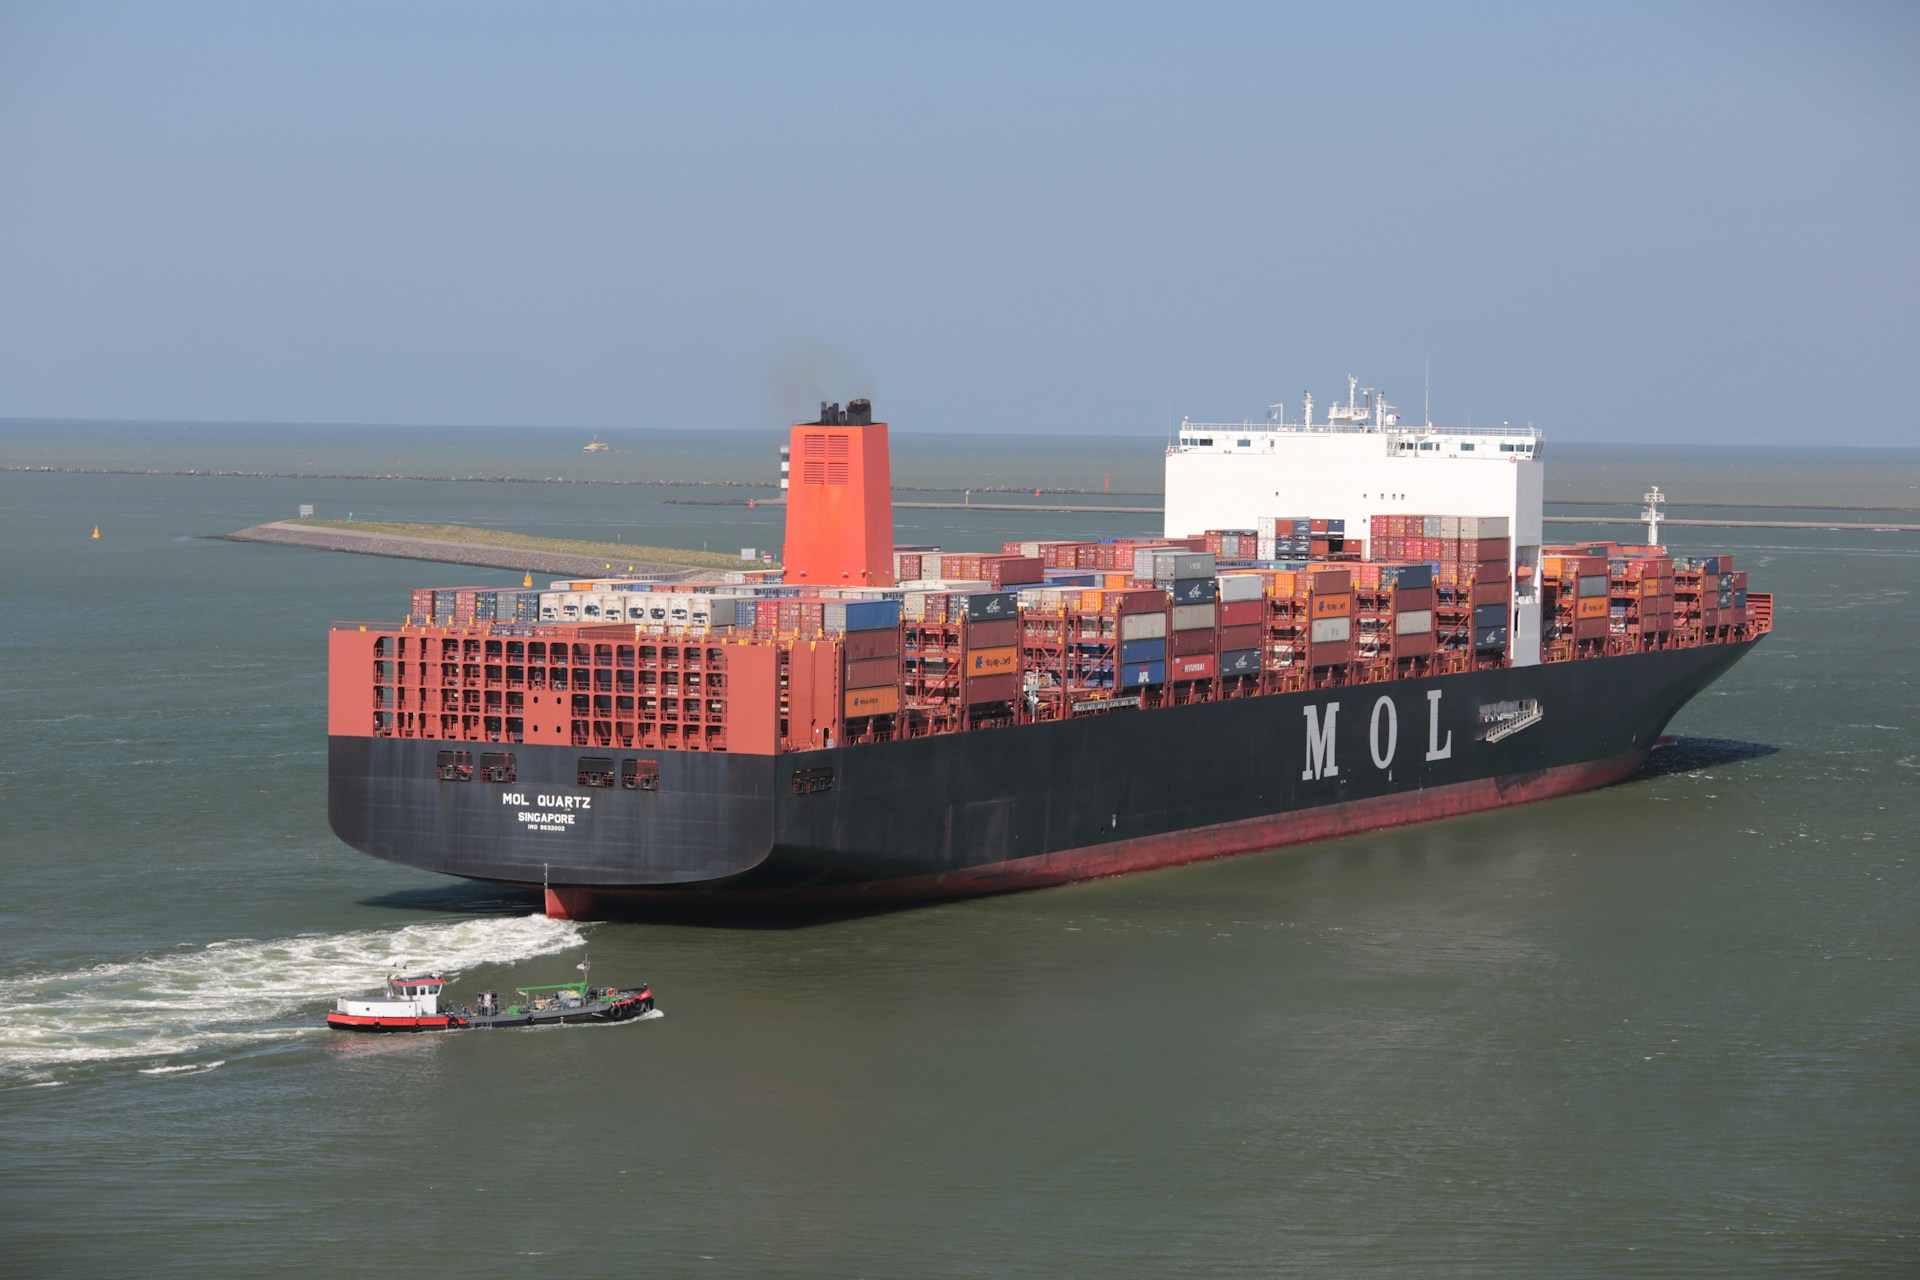 A MOL container ship at sea